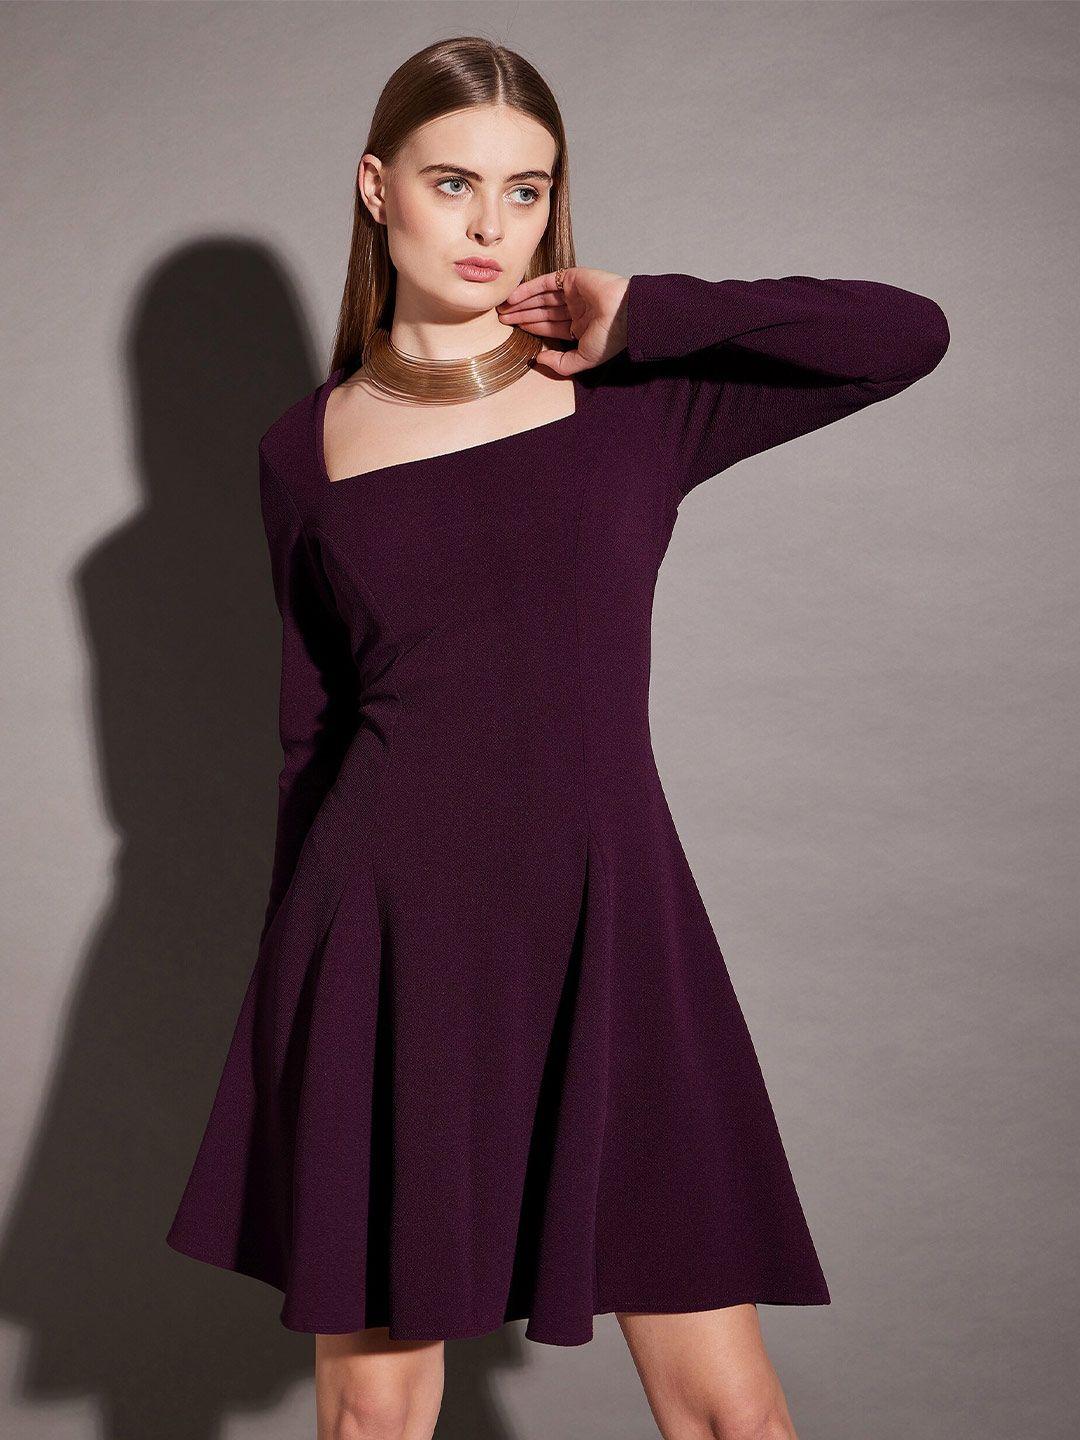 mabish by sonal jain purple dress